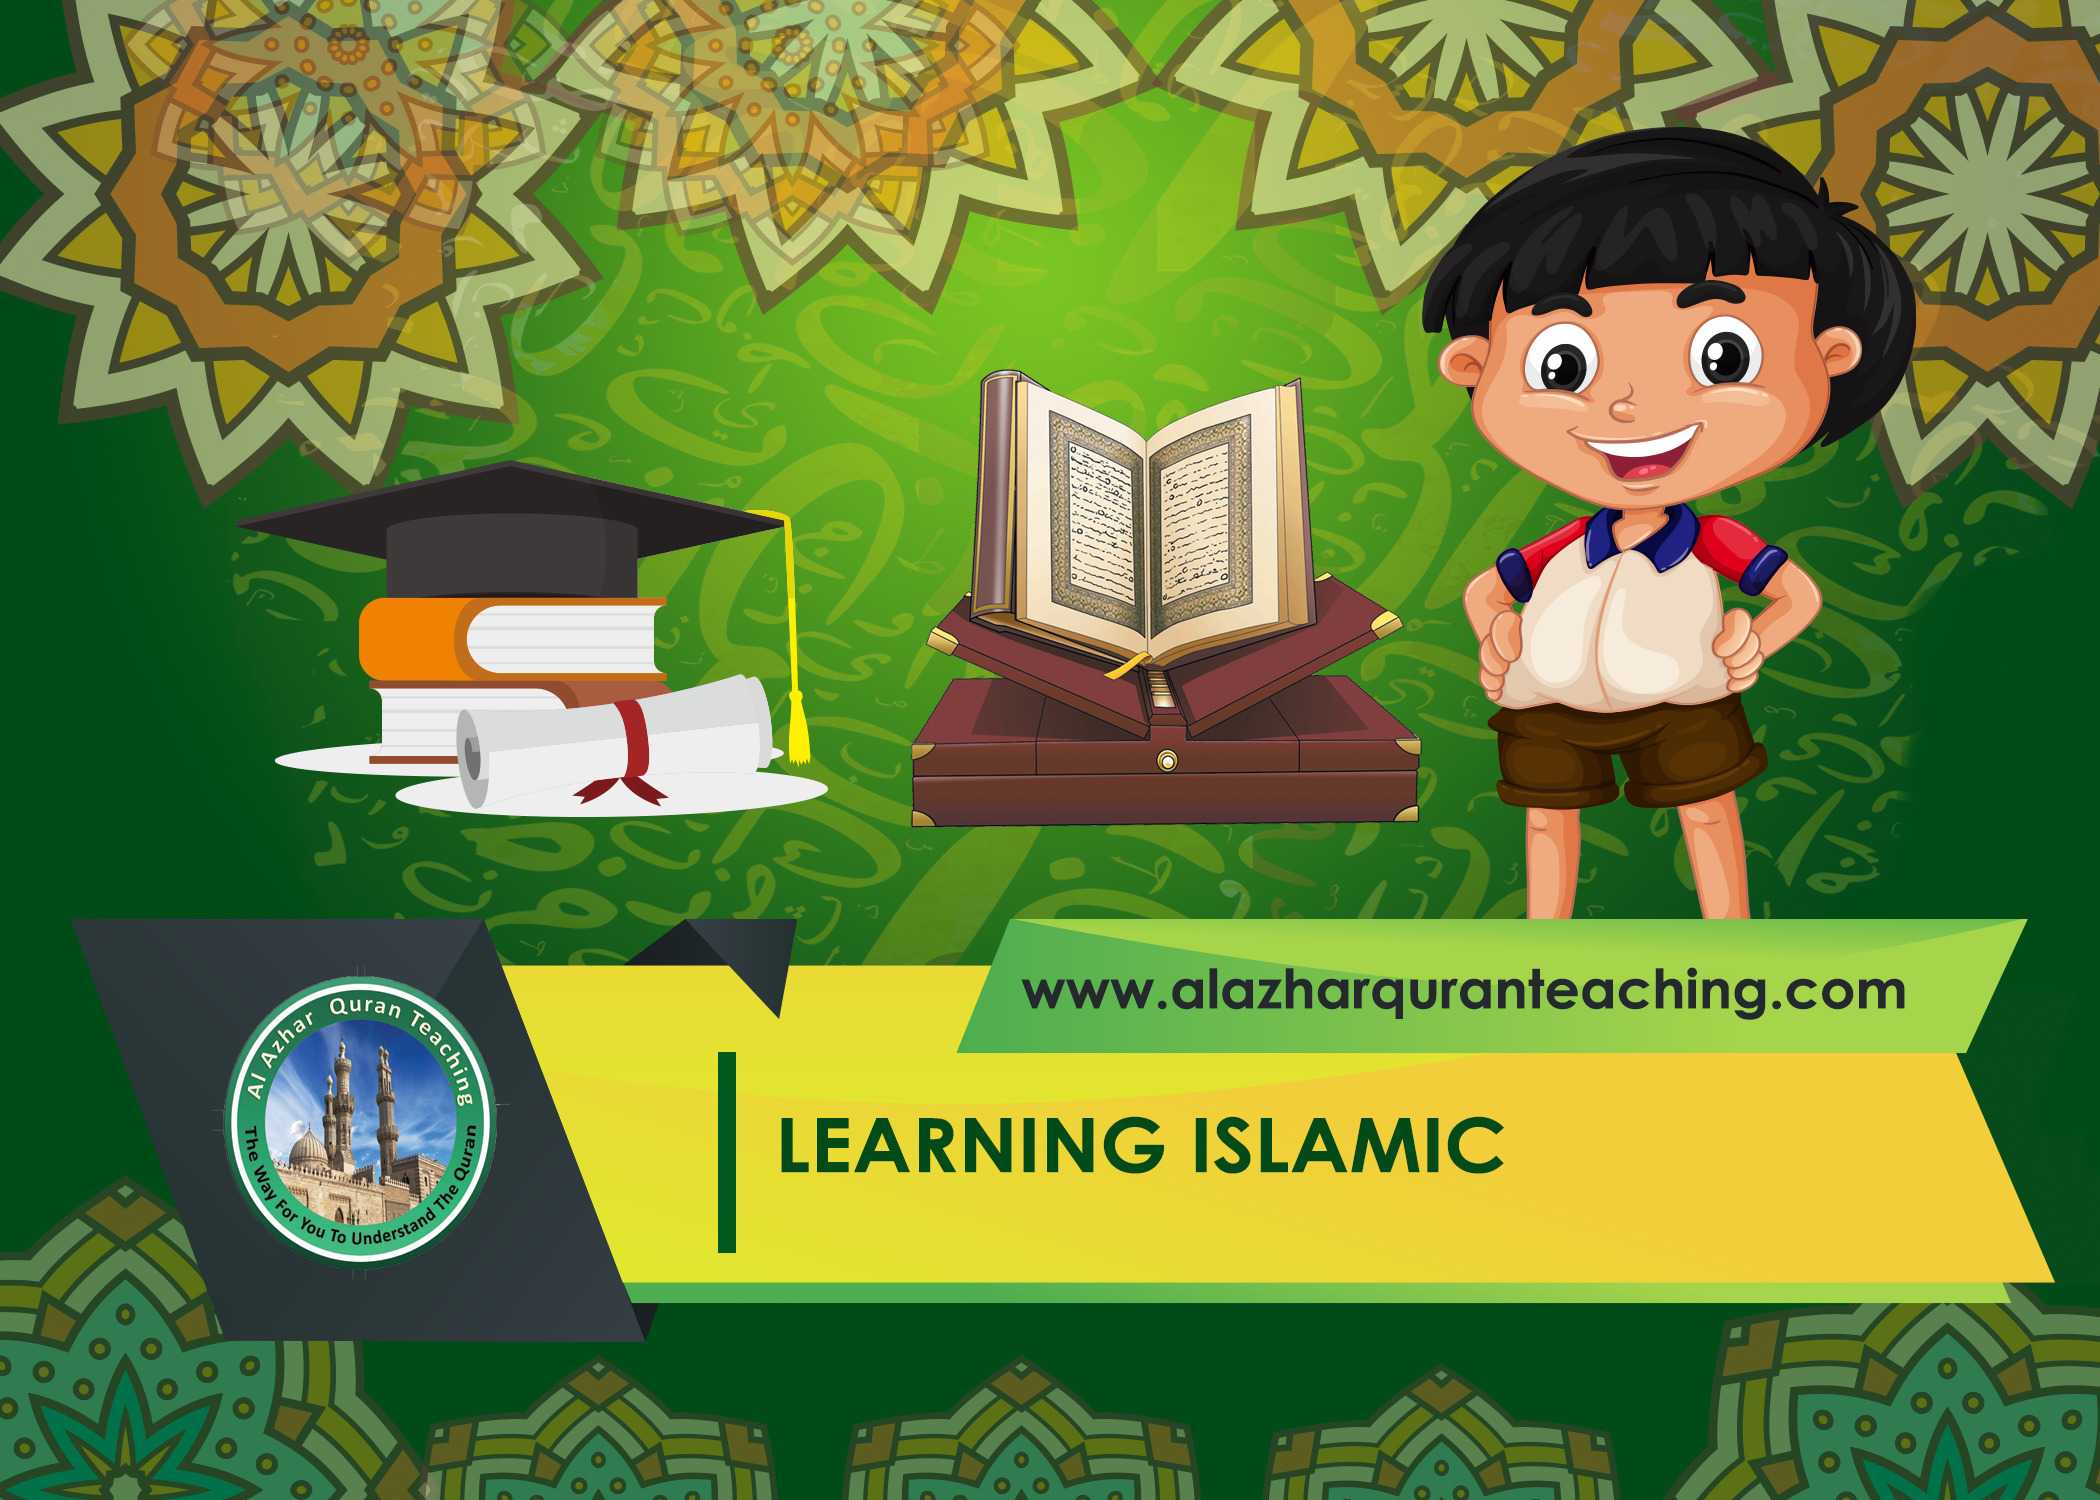 learning-islamic-online-alazhar-quran-teaching-skype-alazharquranteaching